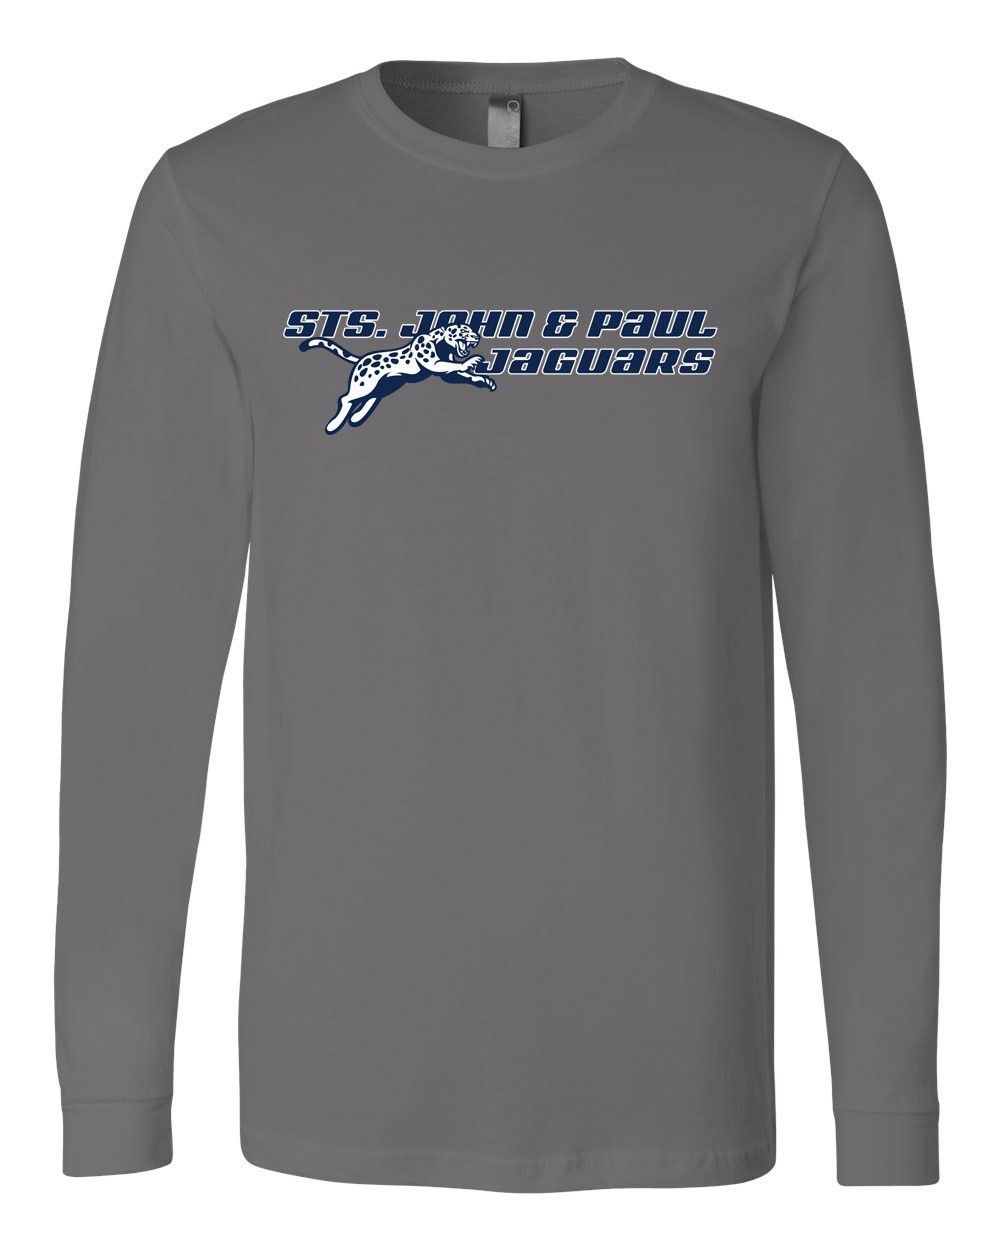 SJP Spirit Wear Men's Crew Neck L/S T-shirt w/ Jaguar Logo - Please Allow 2-3 Weeks for Delivery